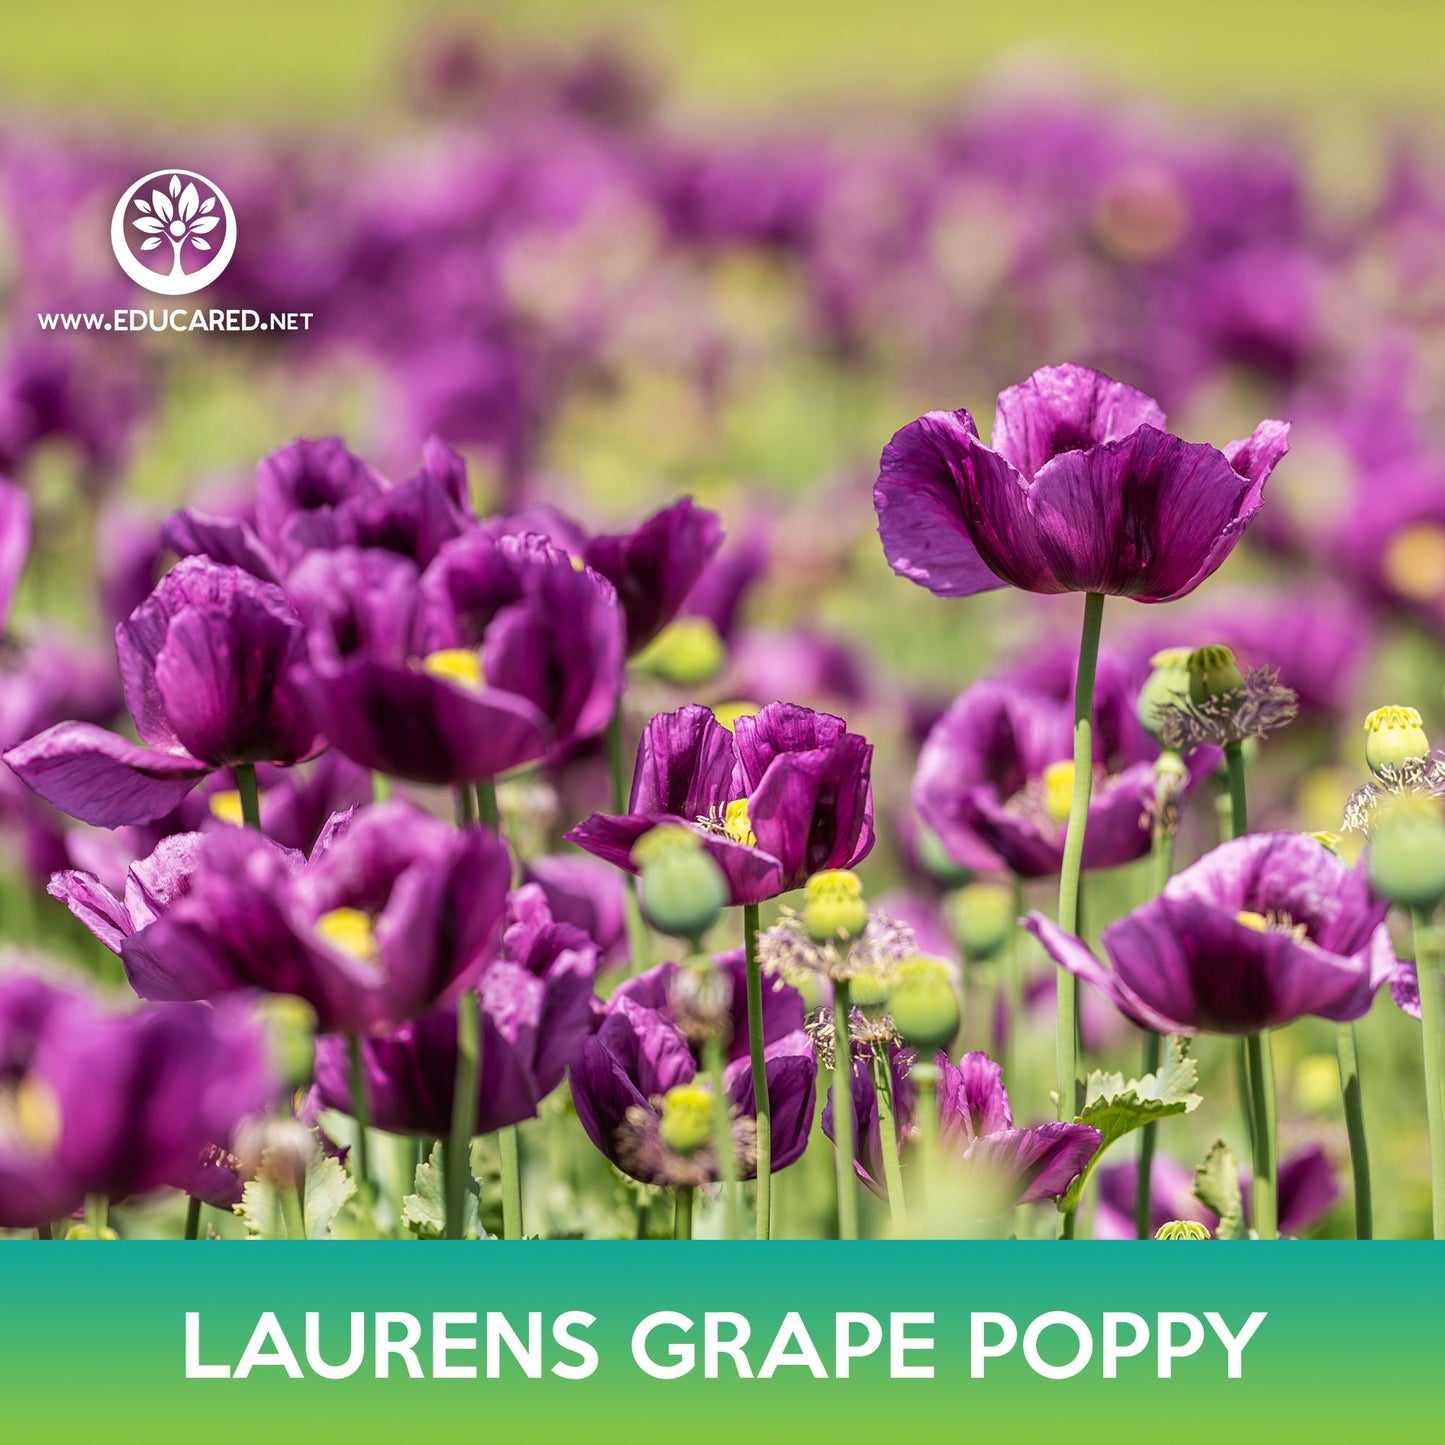 Laurens Grape Poppy Seeds